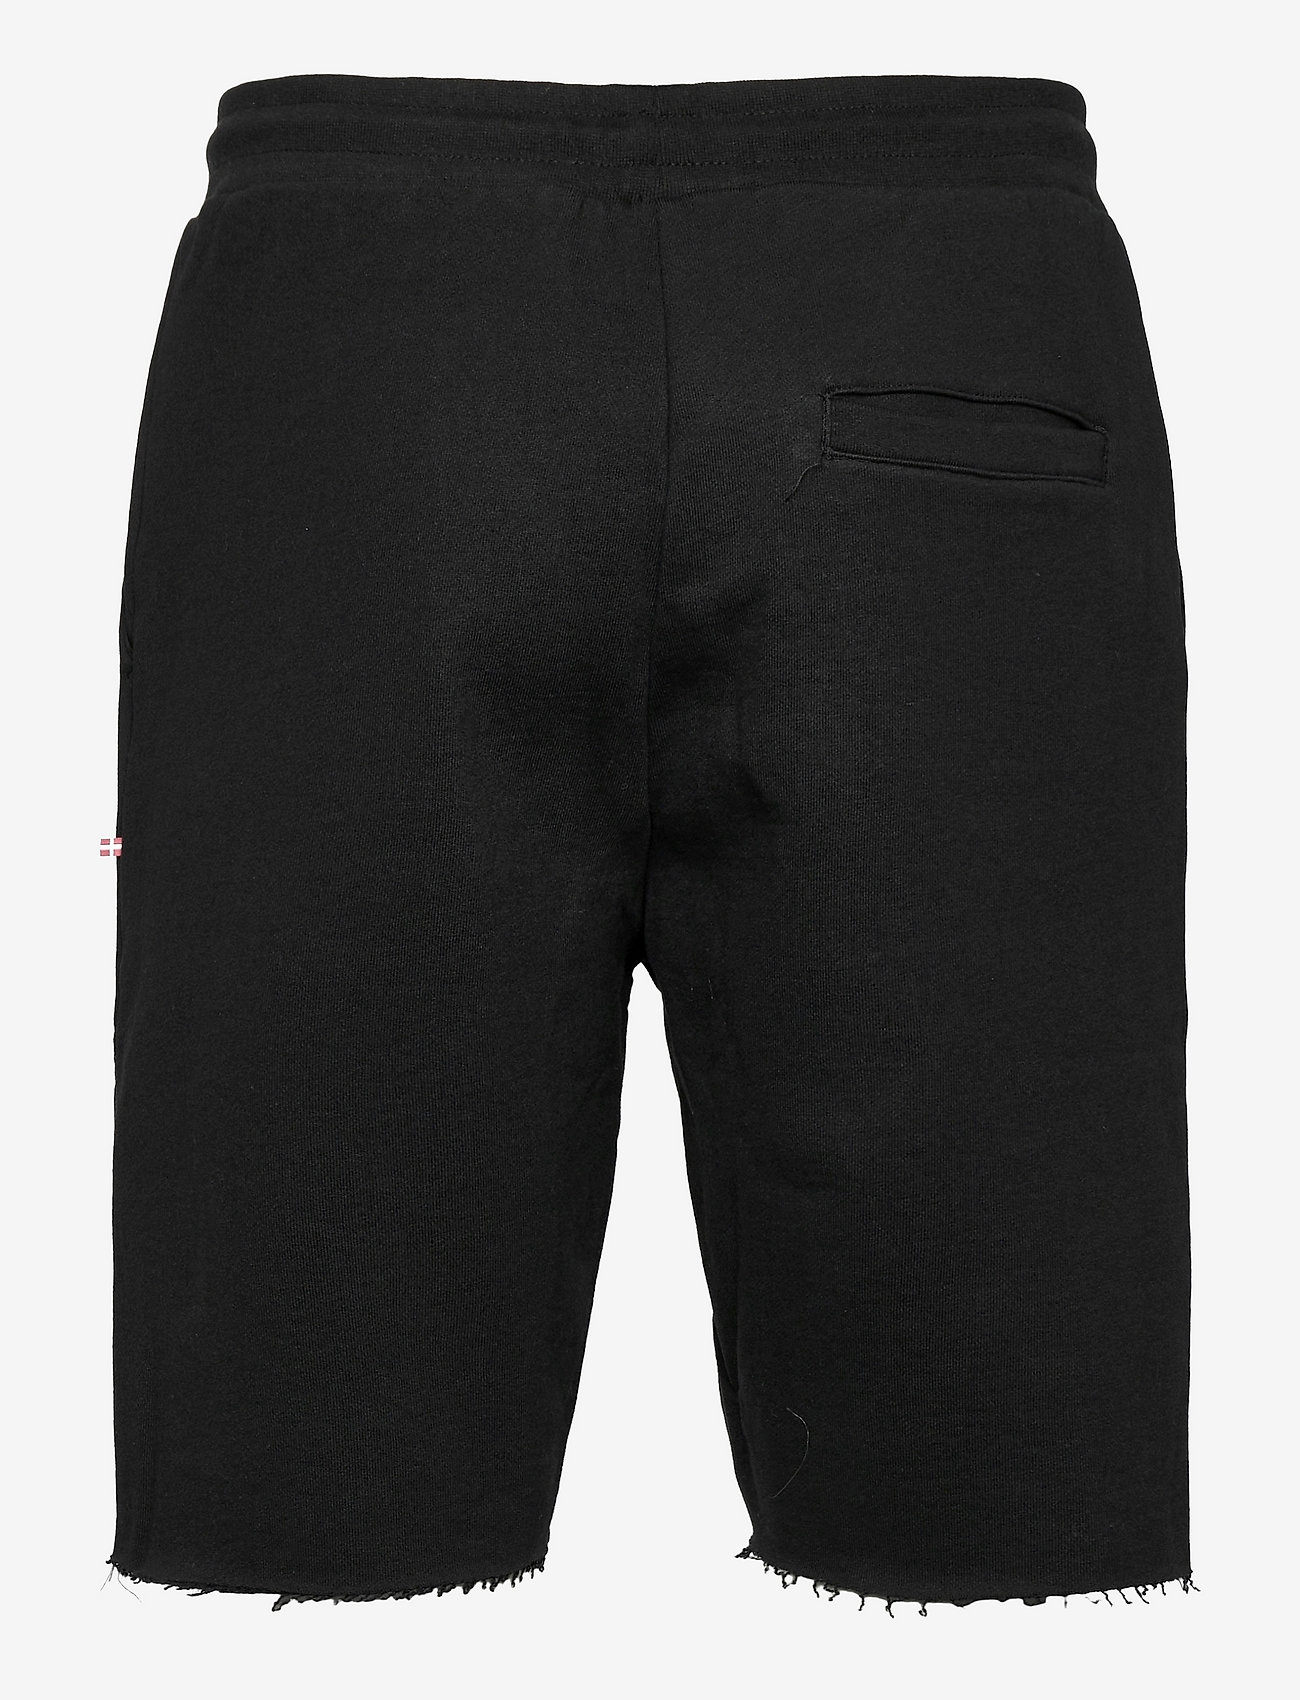 HAN Kjøbenhavn - Sweat shorts - Šorti - black logo - 1